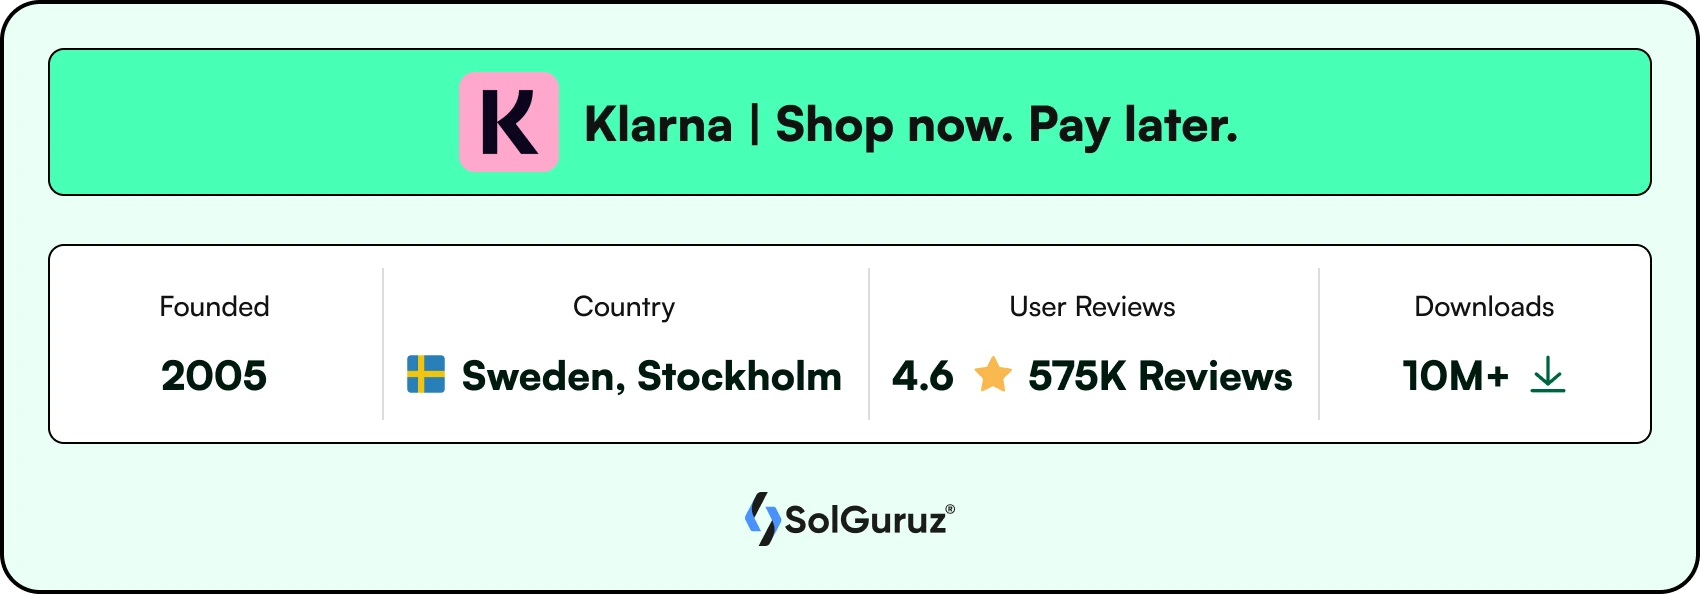 Klarna Shop now Pay later App